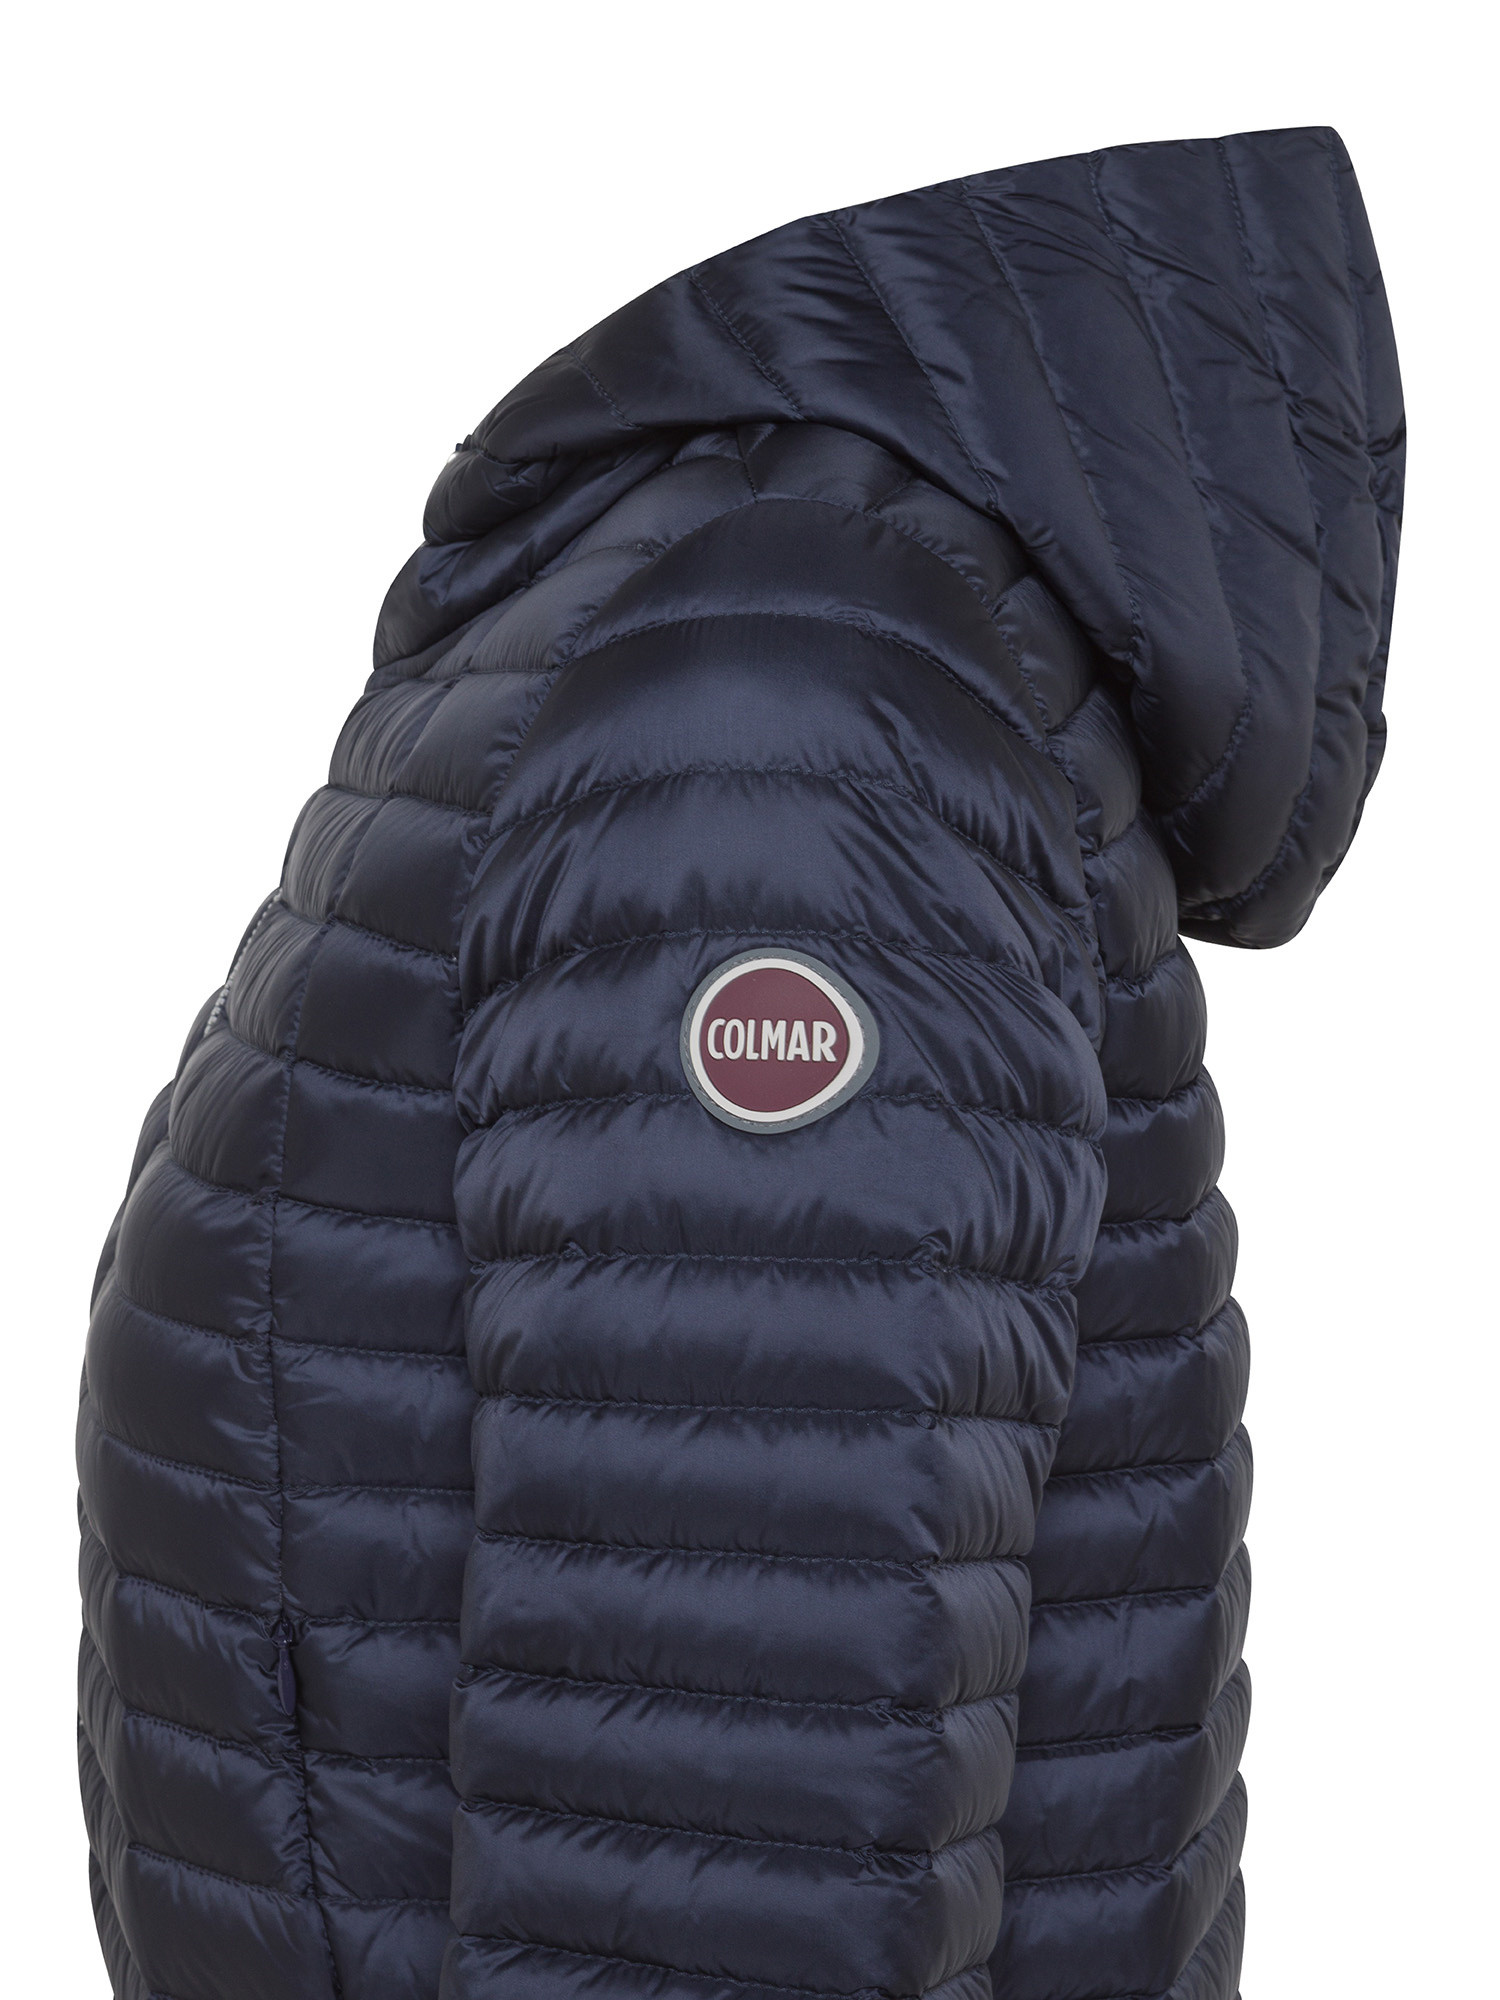 Colmar - Down jacket with hood, Dark Blue, large image number 2